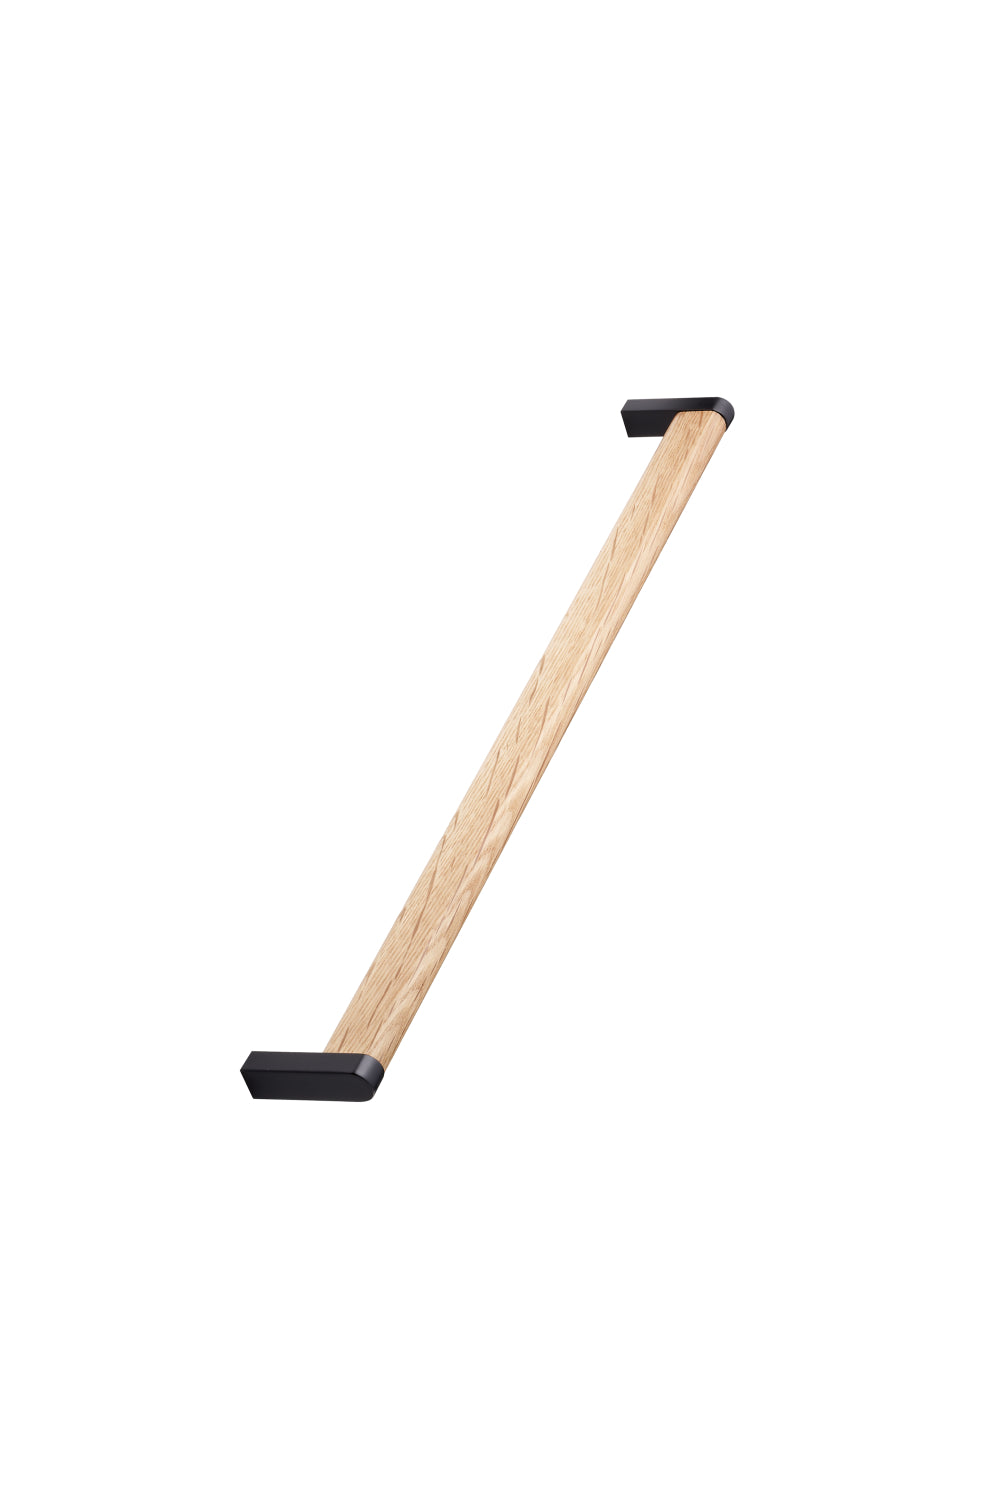 【Danish Made】Crossing bar wood handle